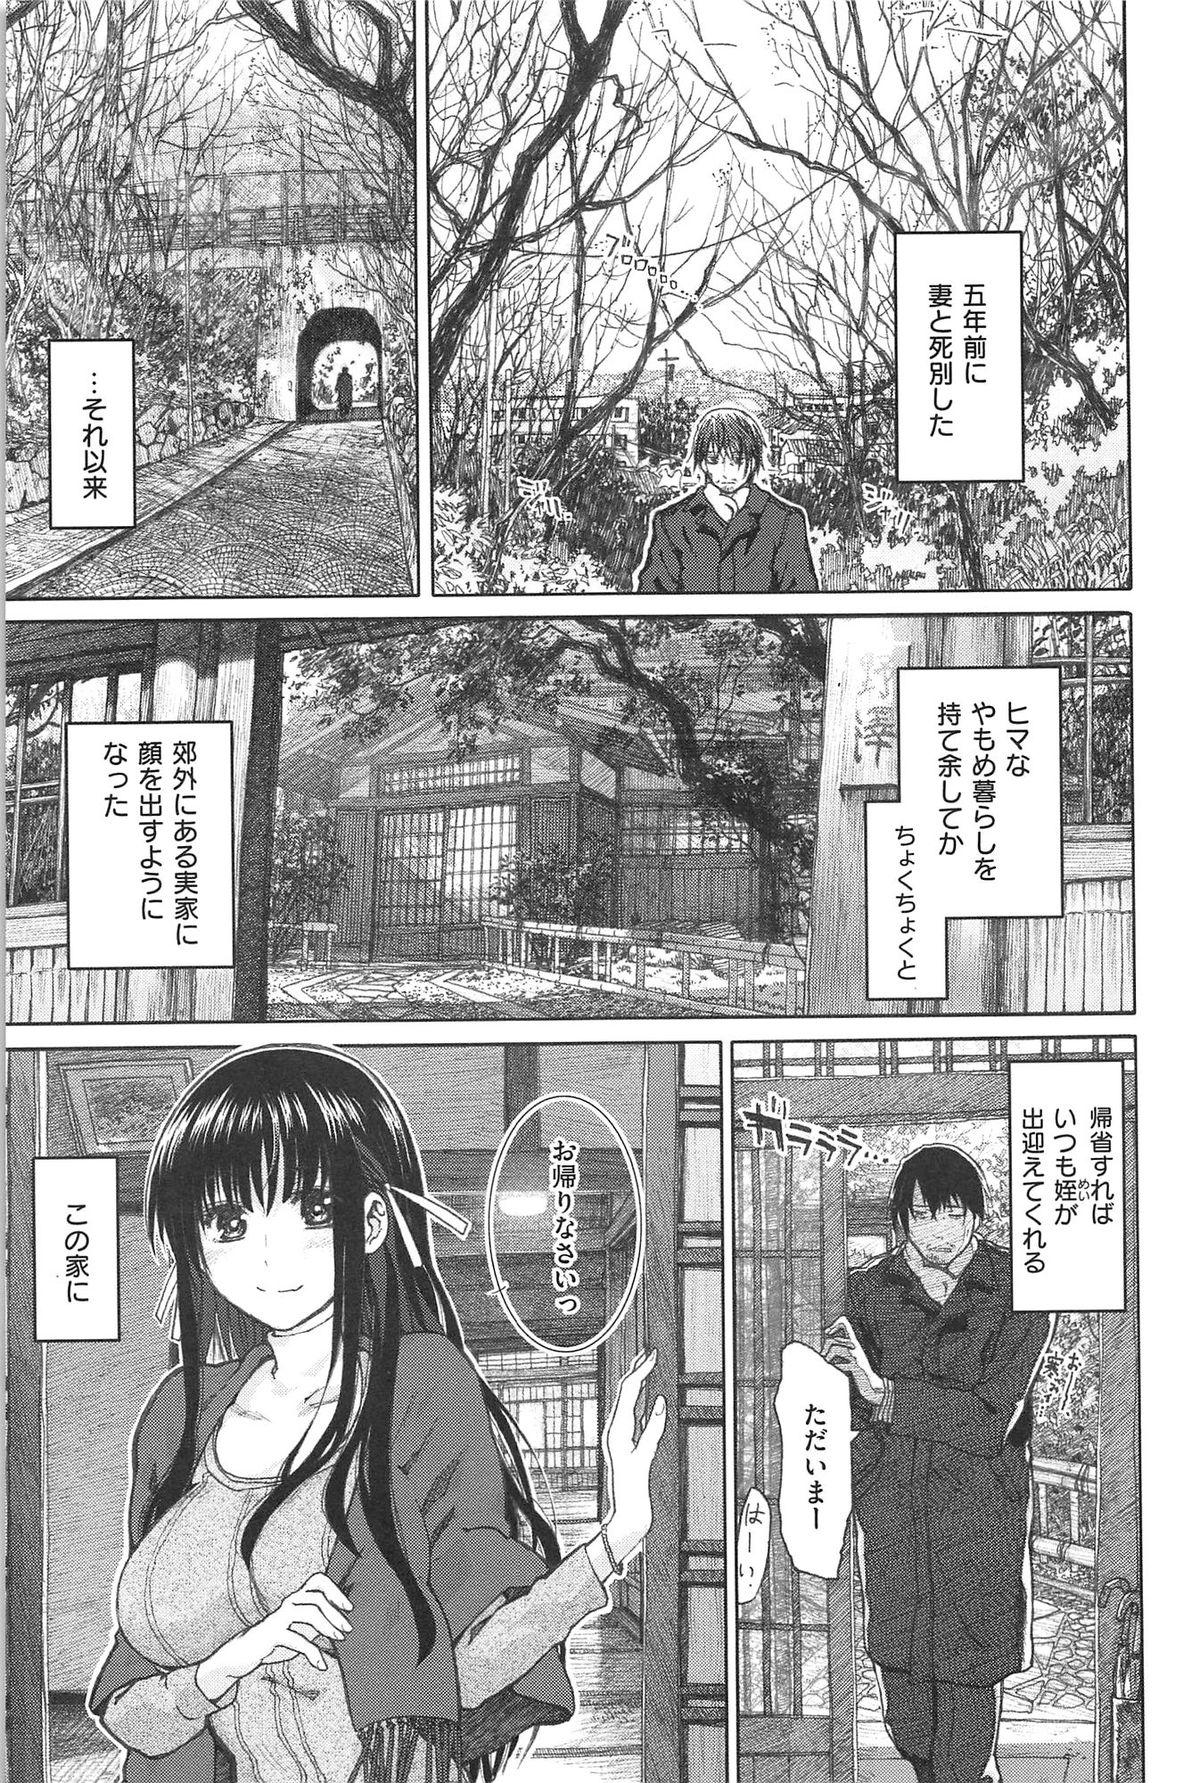 [Dagashi] Junketsu no Owaru Hibi (Beautiful Days of Losing Virginity) … (WANI MAGAZINE COMICS SPECIAL) 63